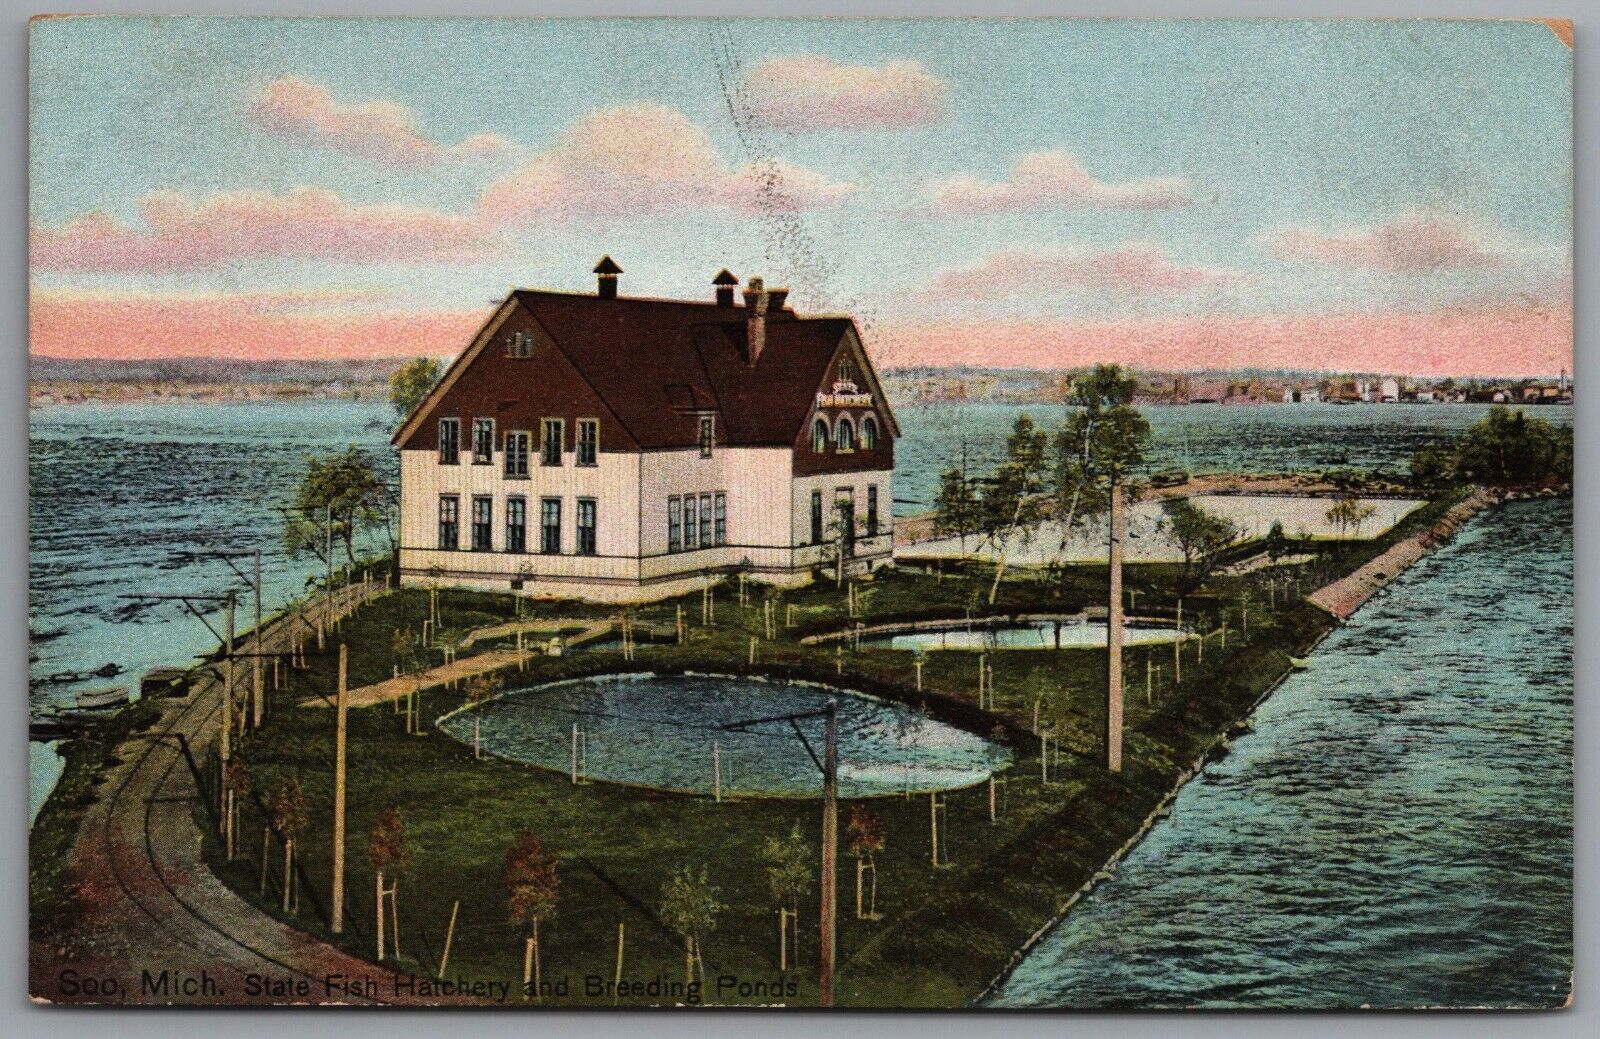 Soo Mich. State Fish Hatchery and Breeding Ponds c1908 Postcard Michigan